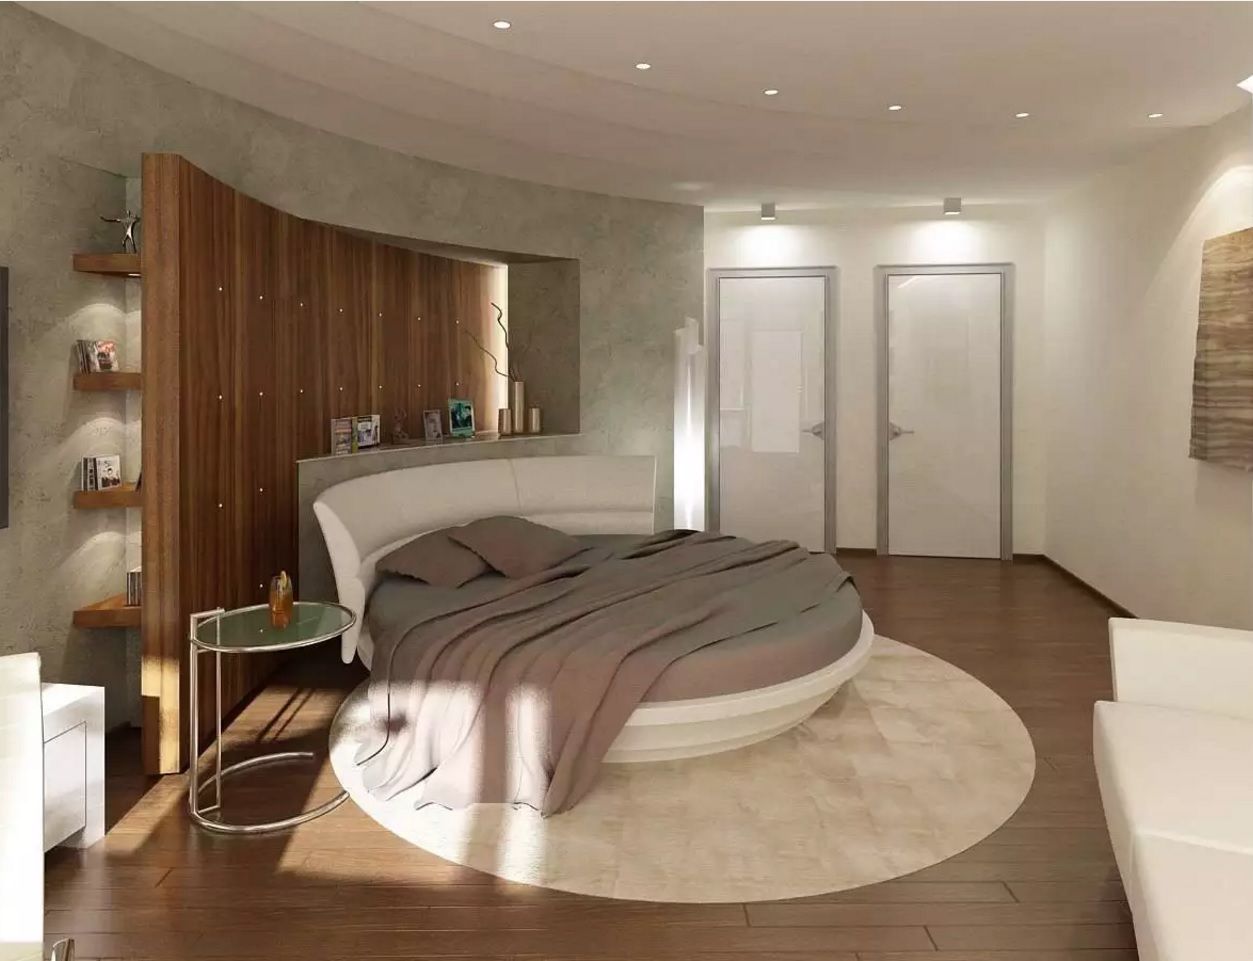 Circle Bed in Unique Bedroom Interior Design - Small Design Ideas